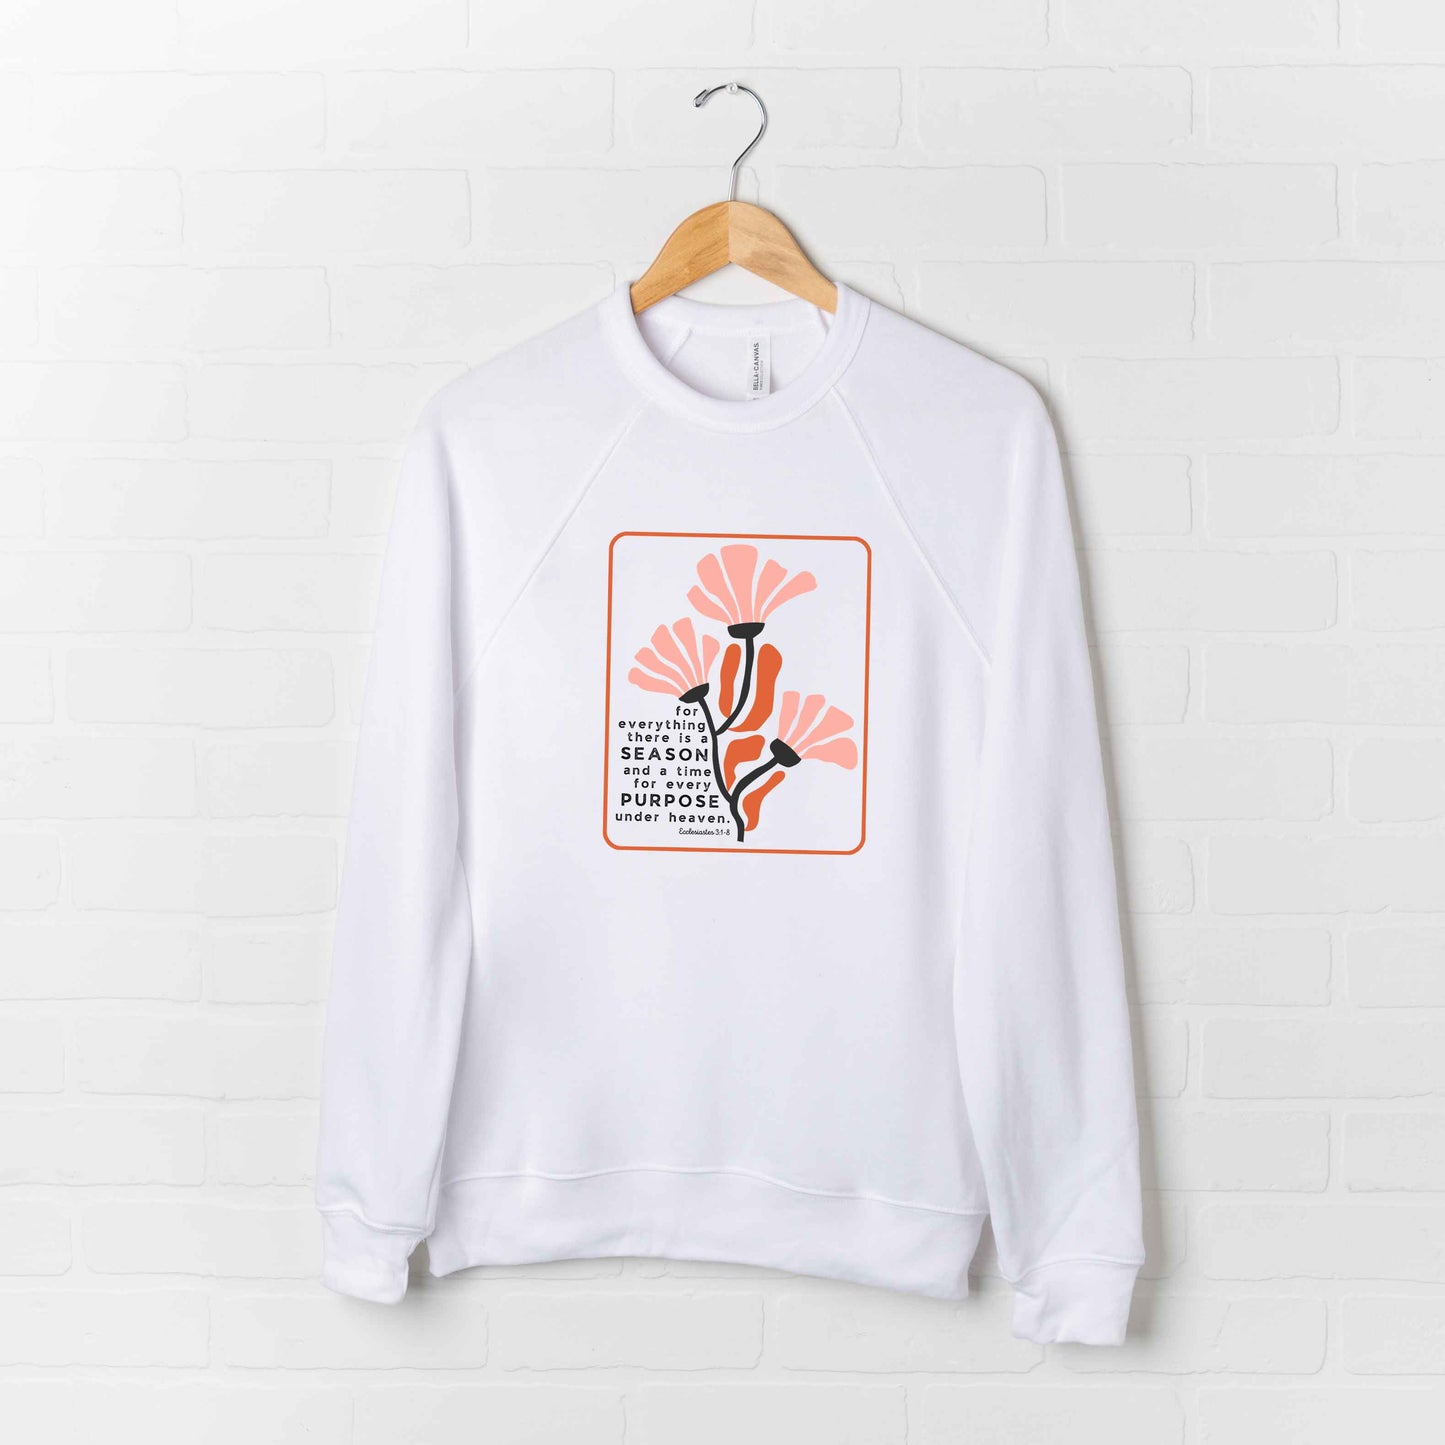 There Is A Season Flowers | Bella Canvas Premium Sweatshirt